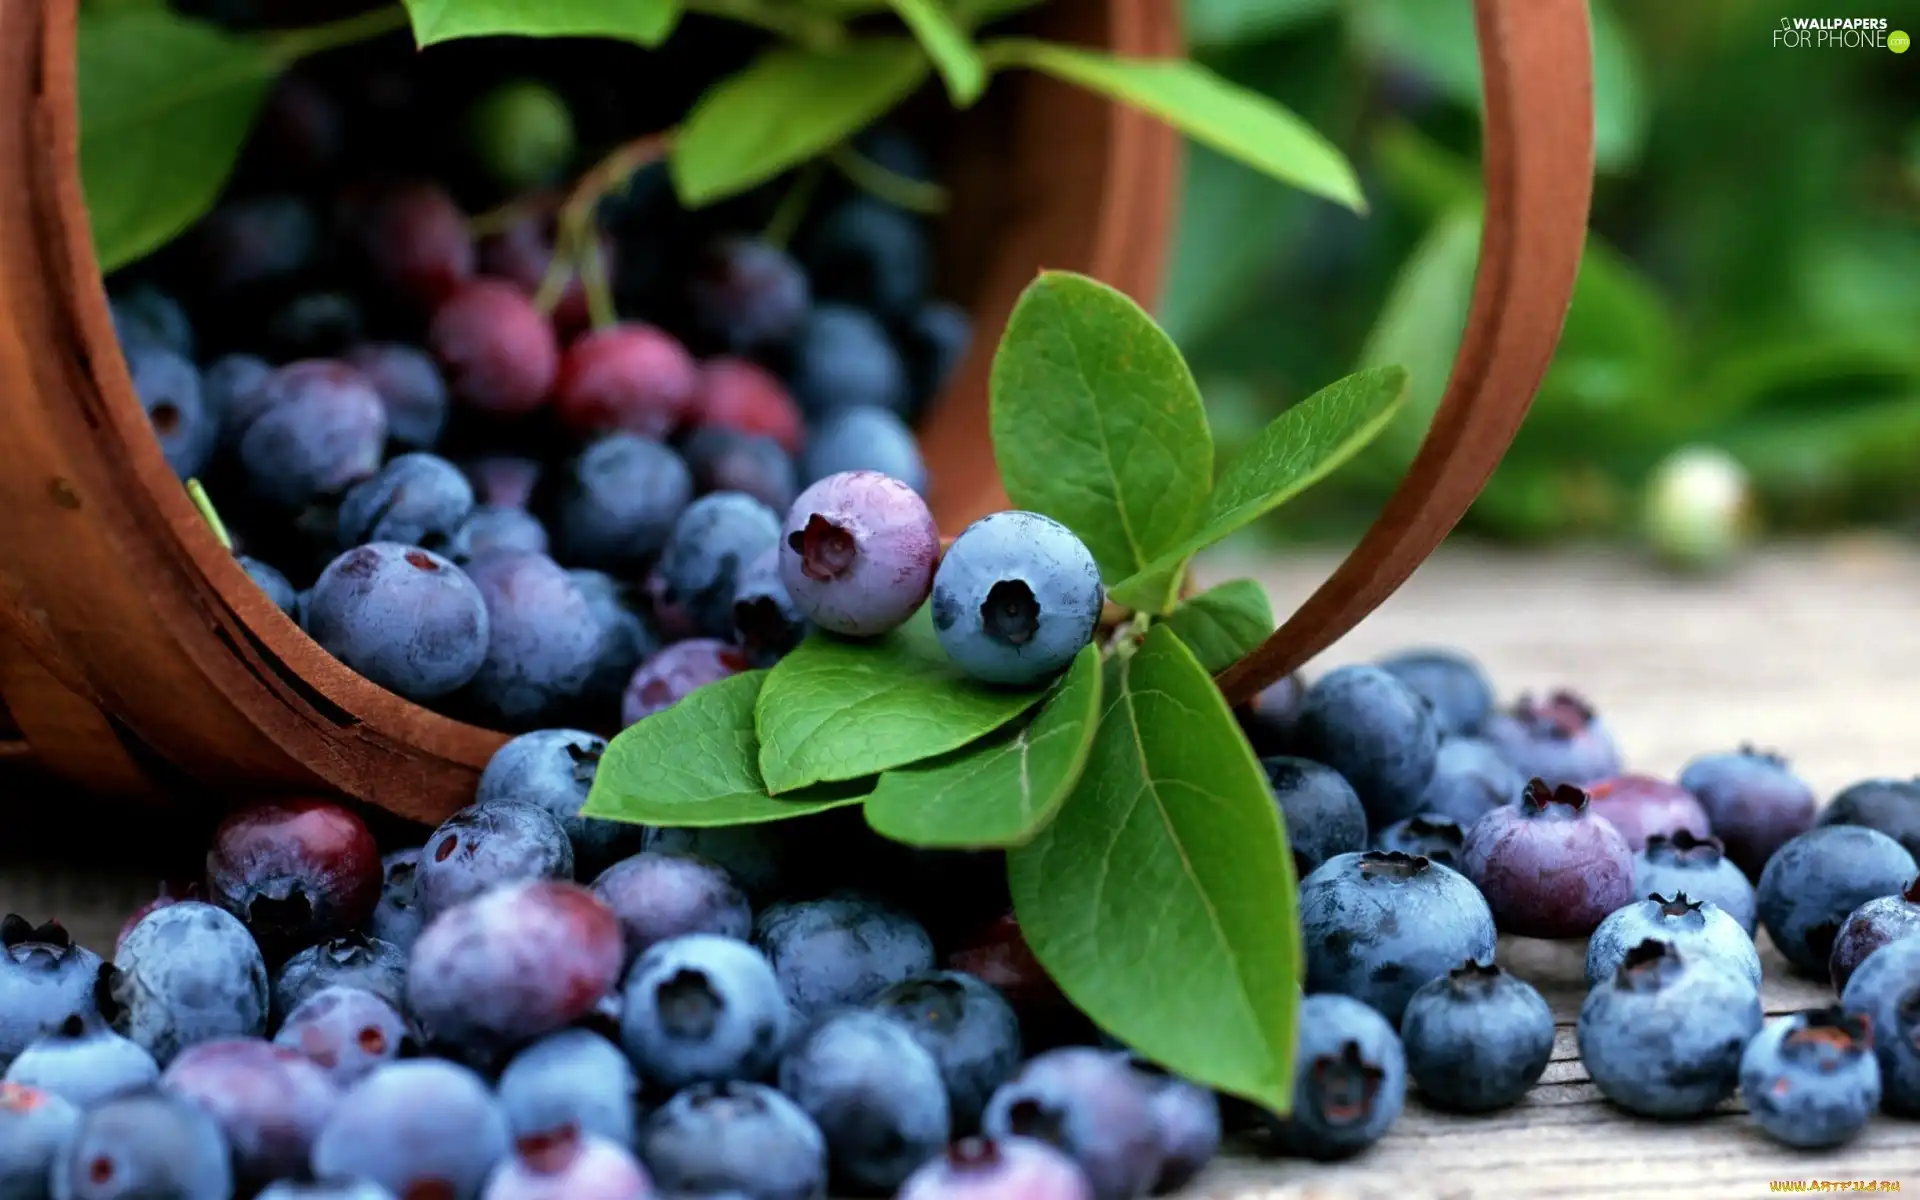 blueberries, basket